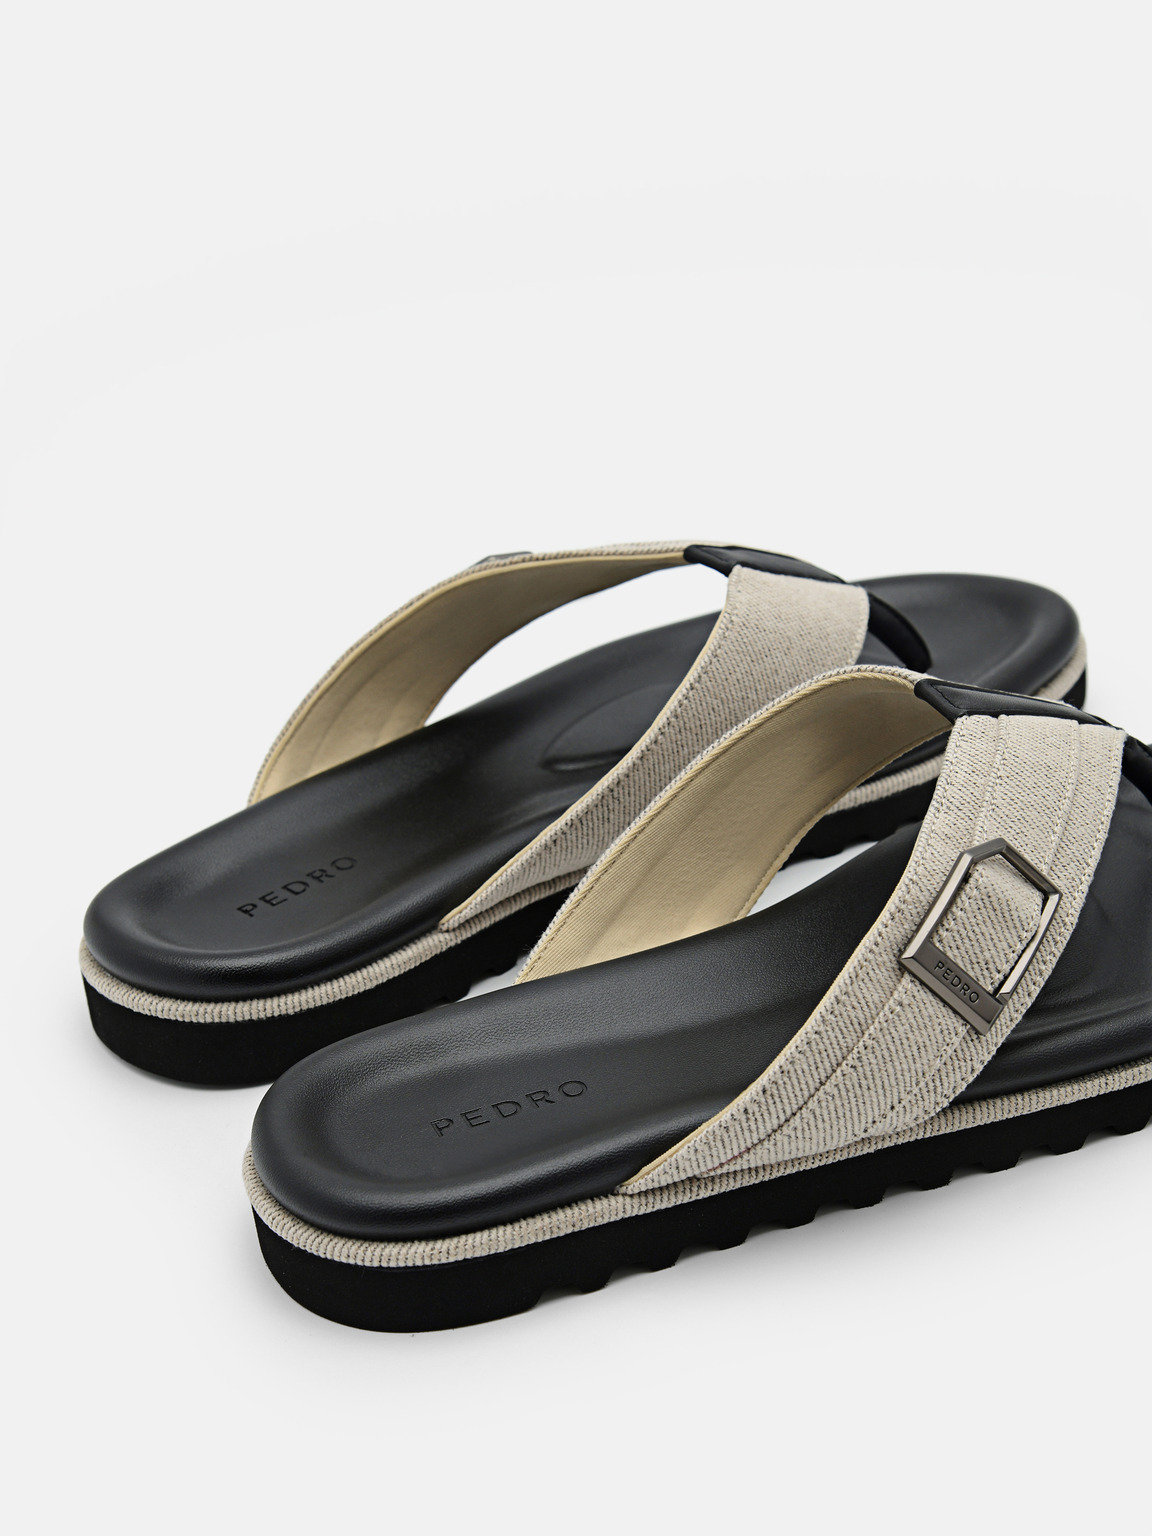 Ezra Fabric Thong Sandals, Beige